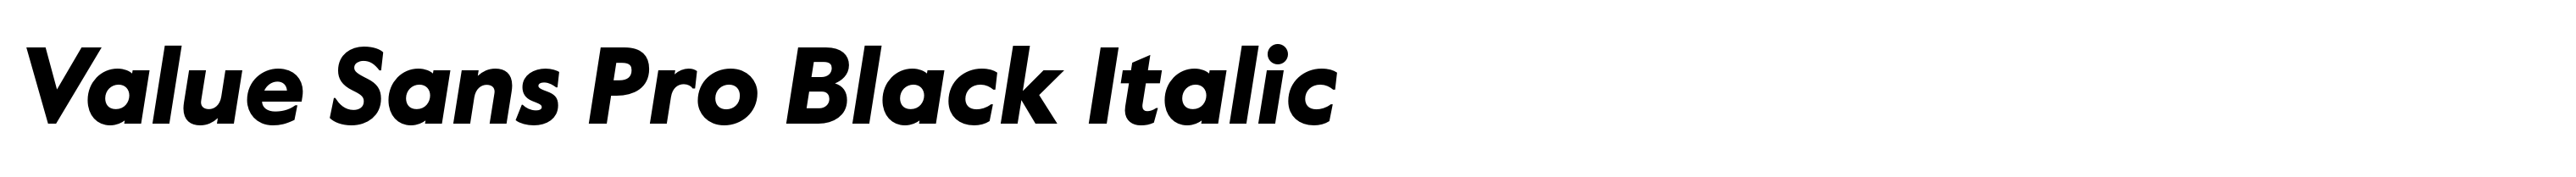 Value Sans Pro Black Italic